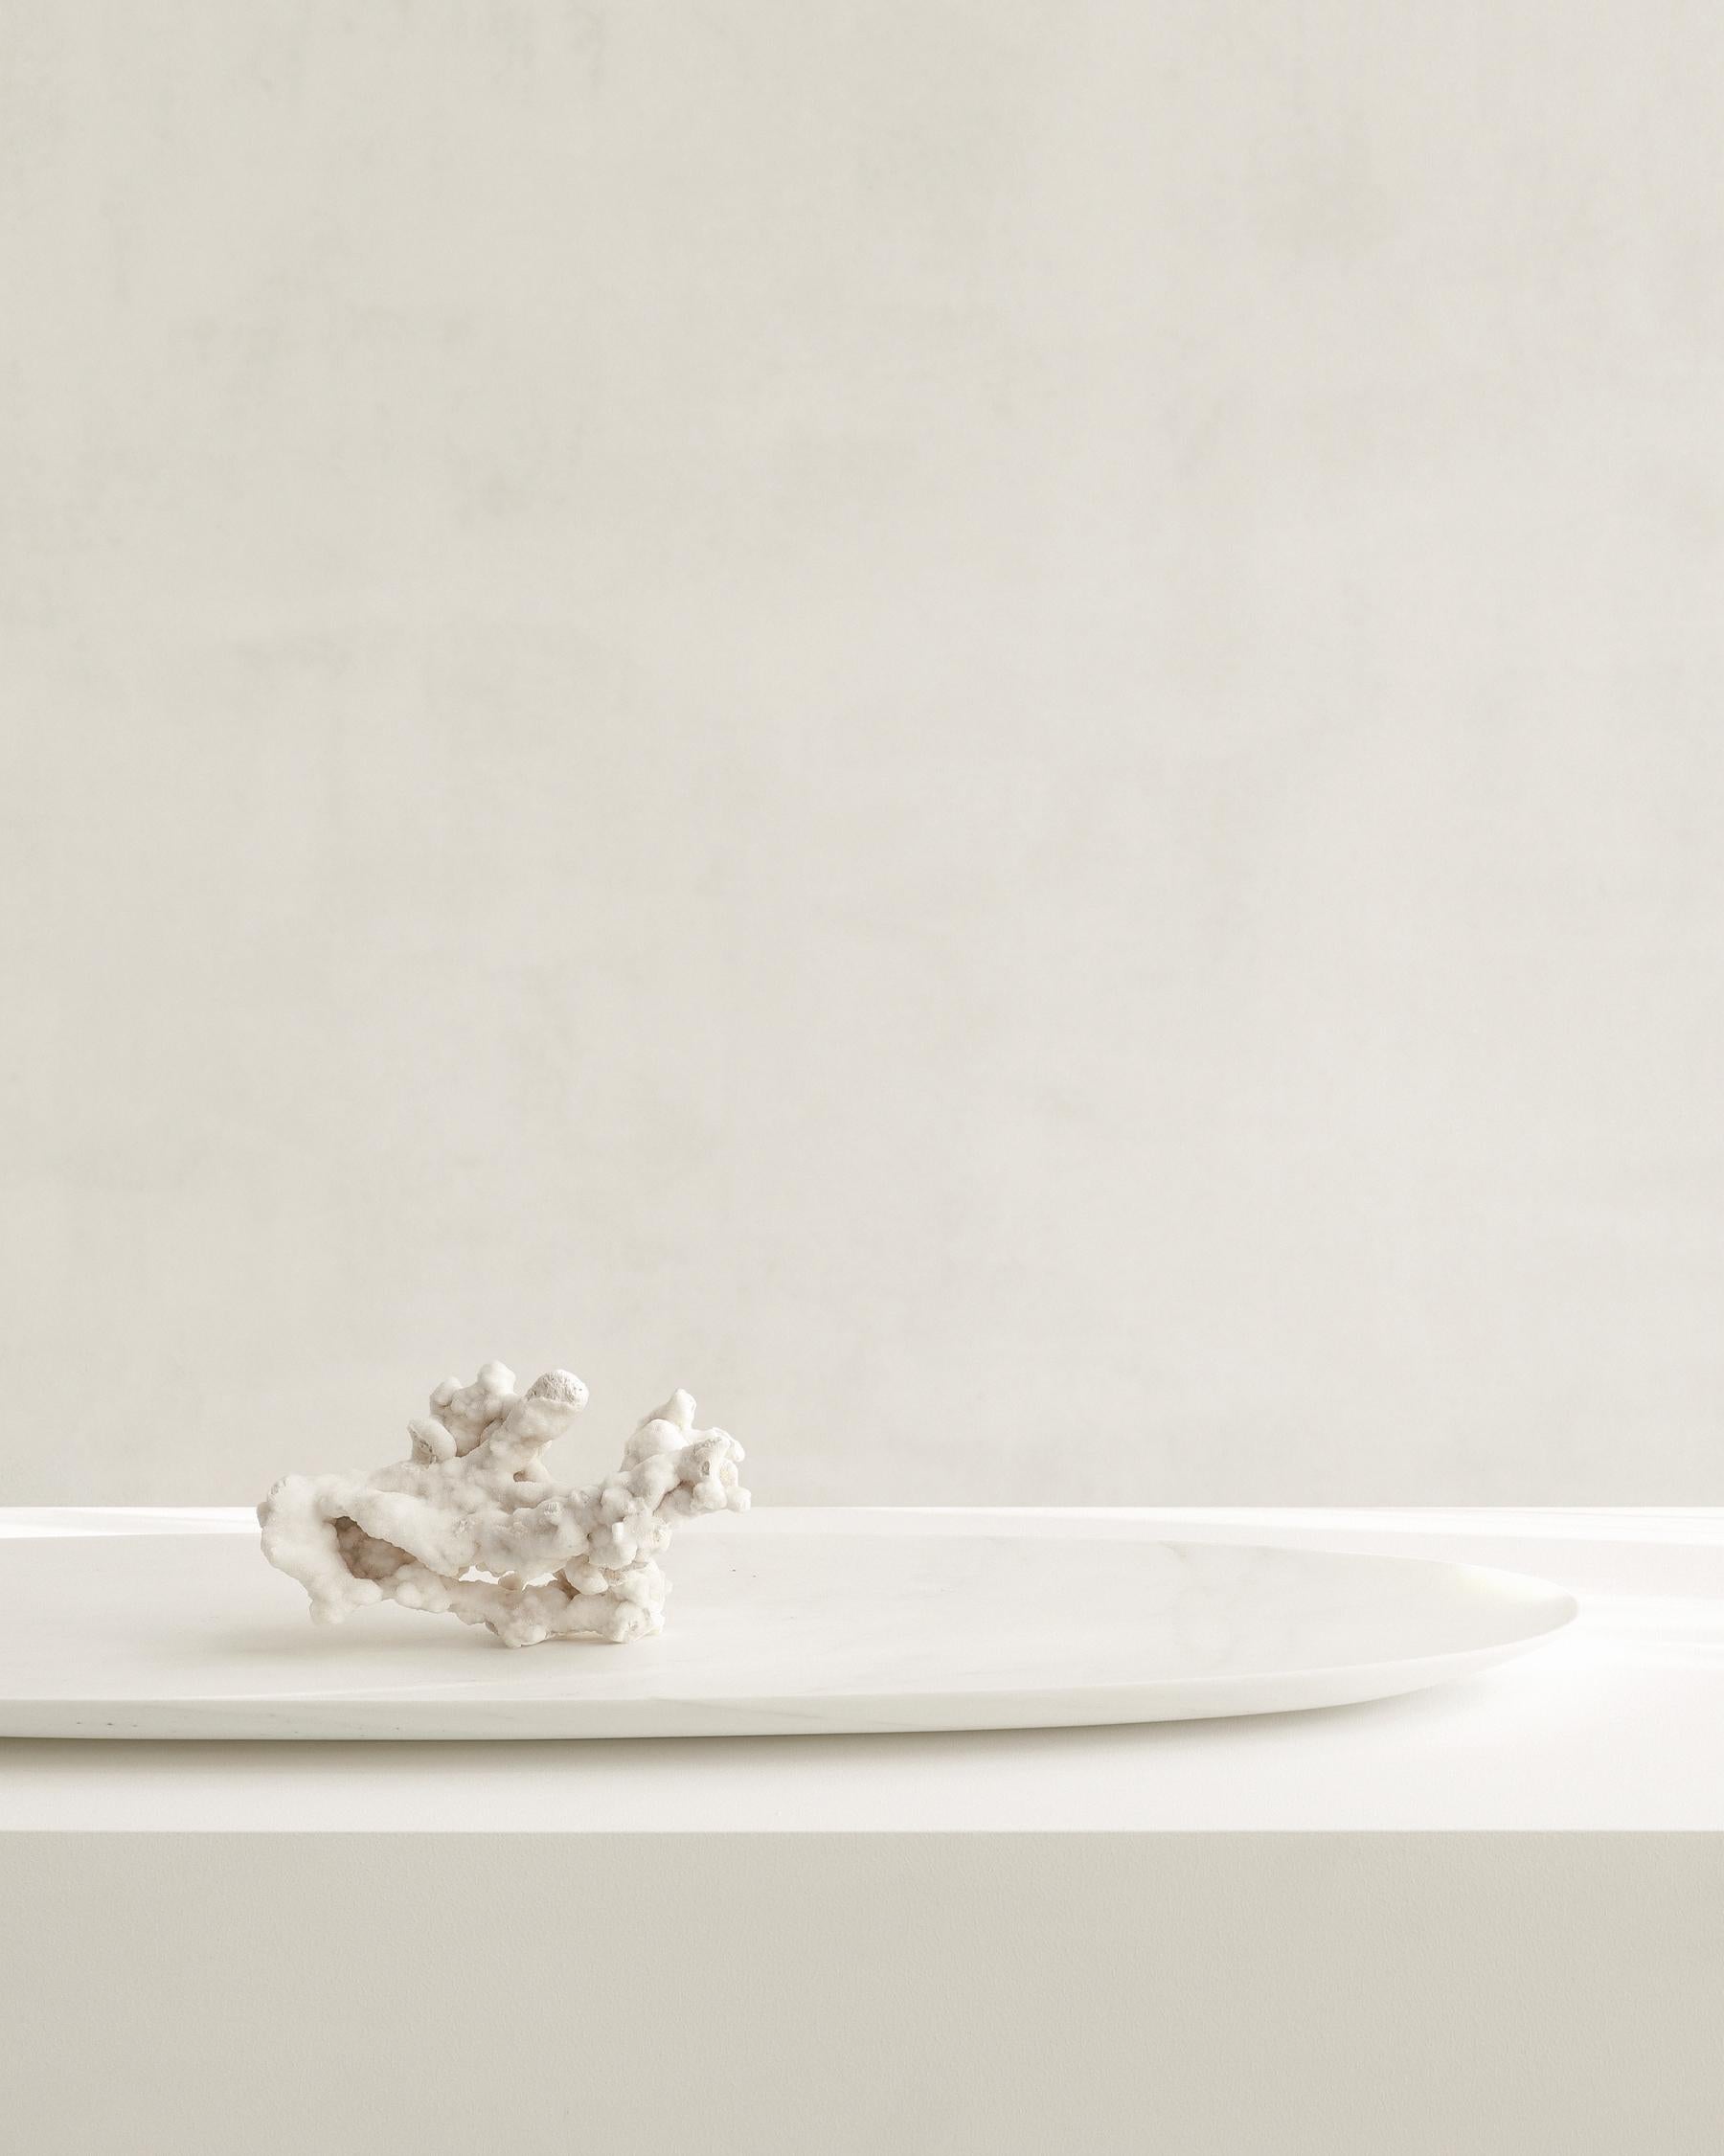 British Contemporary Cremo Delicato Marble Sepia Trey by Homefolks For Sale